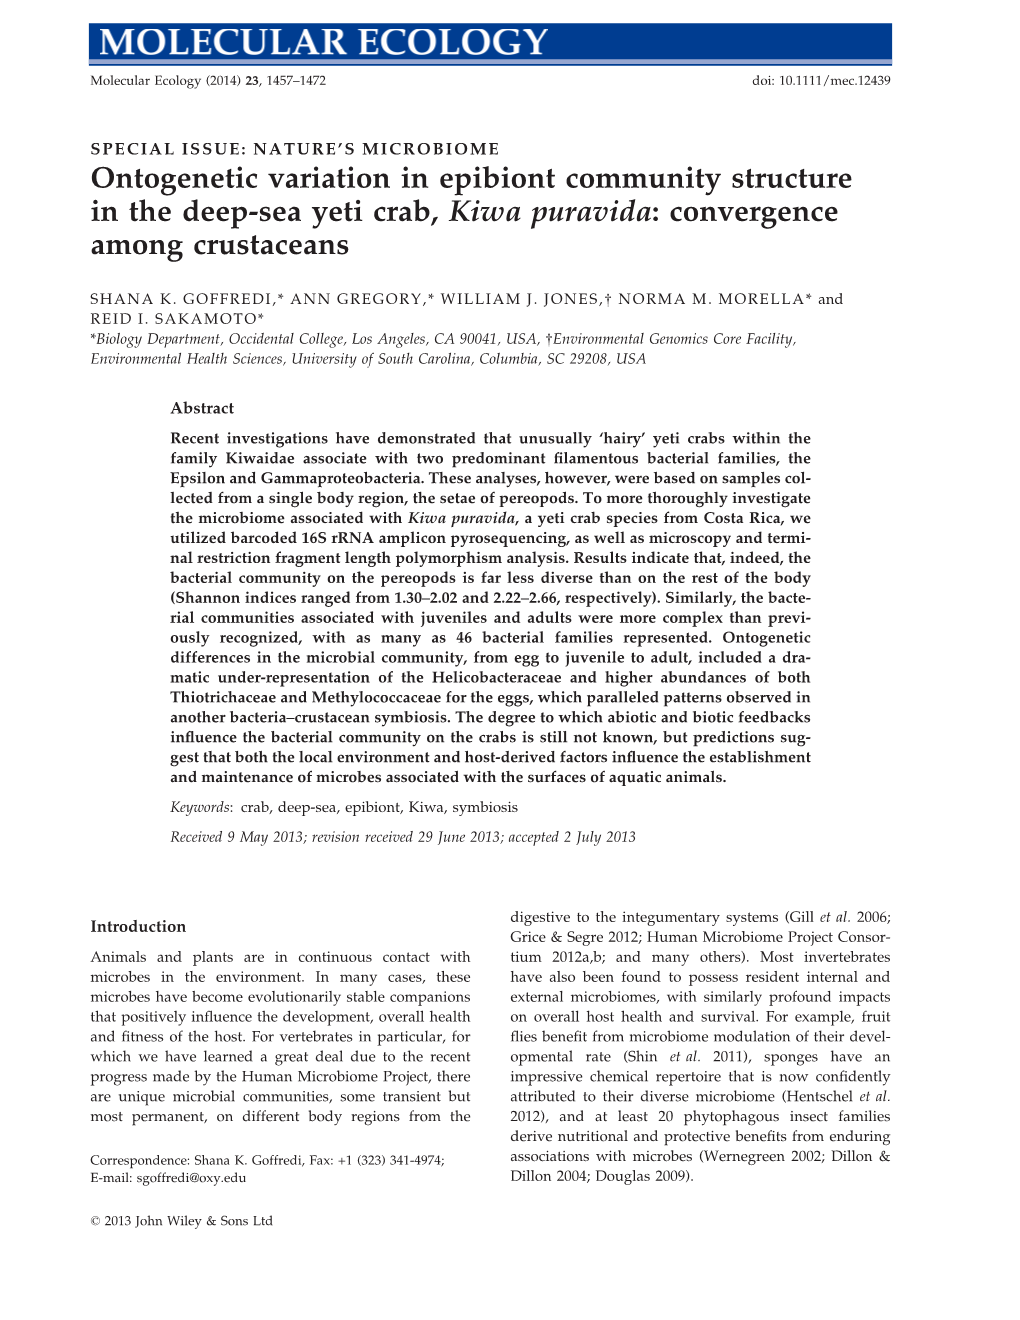 Ontogenetic Variation in Epibiont Community Structure in the Deep-Sea Yeti Crab, Kiwa Puravida: Convergence Among Crustaceans